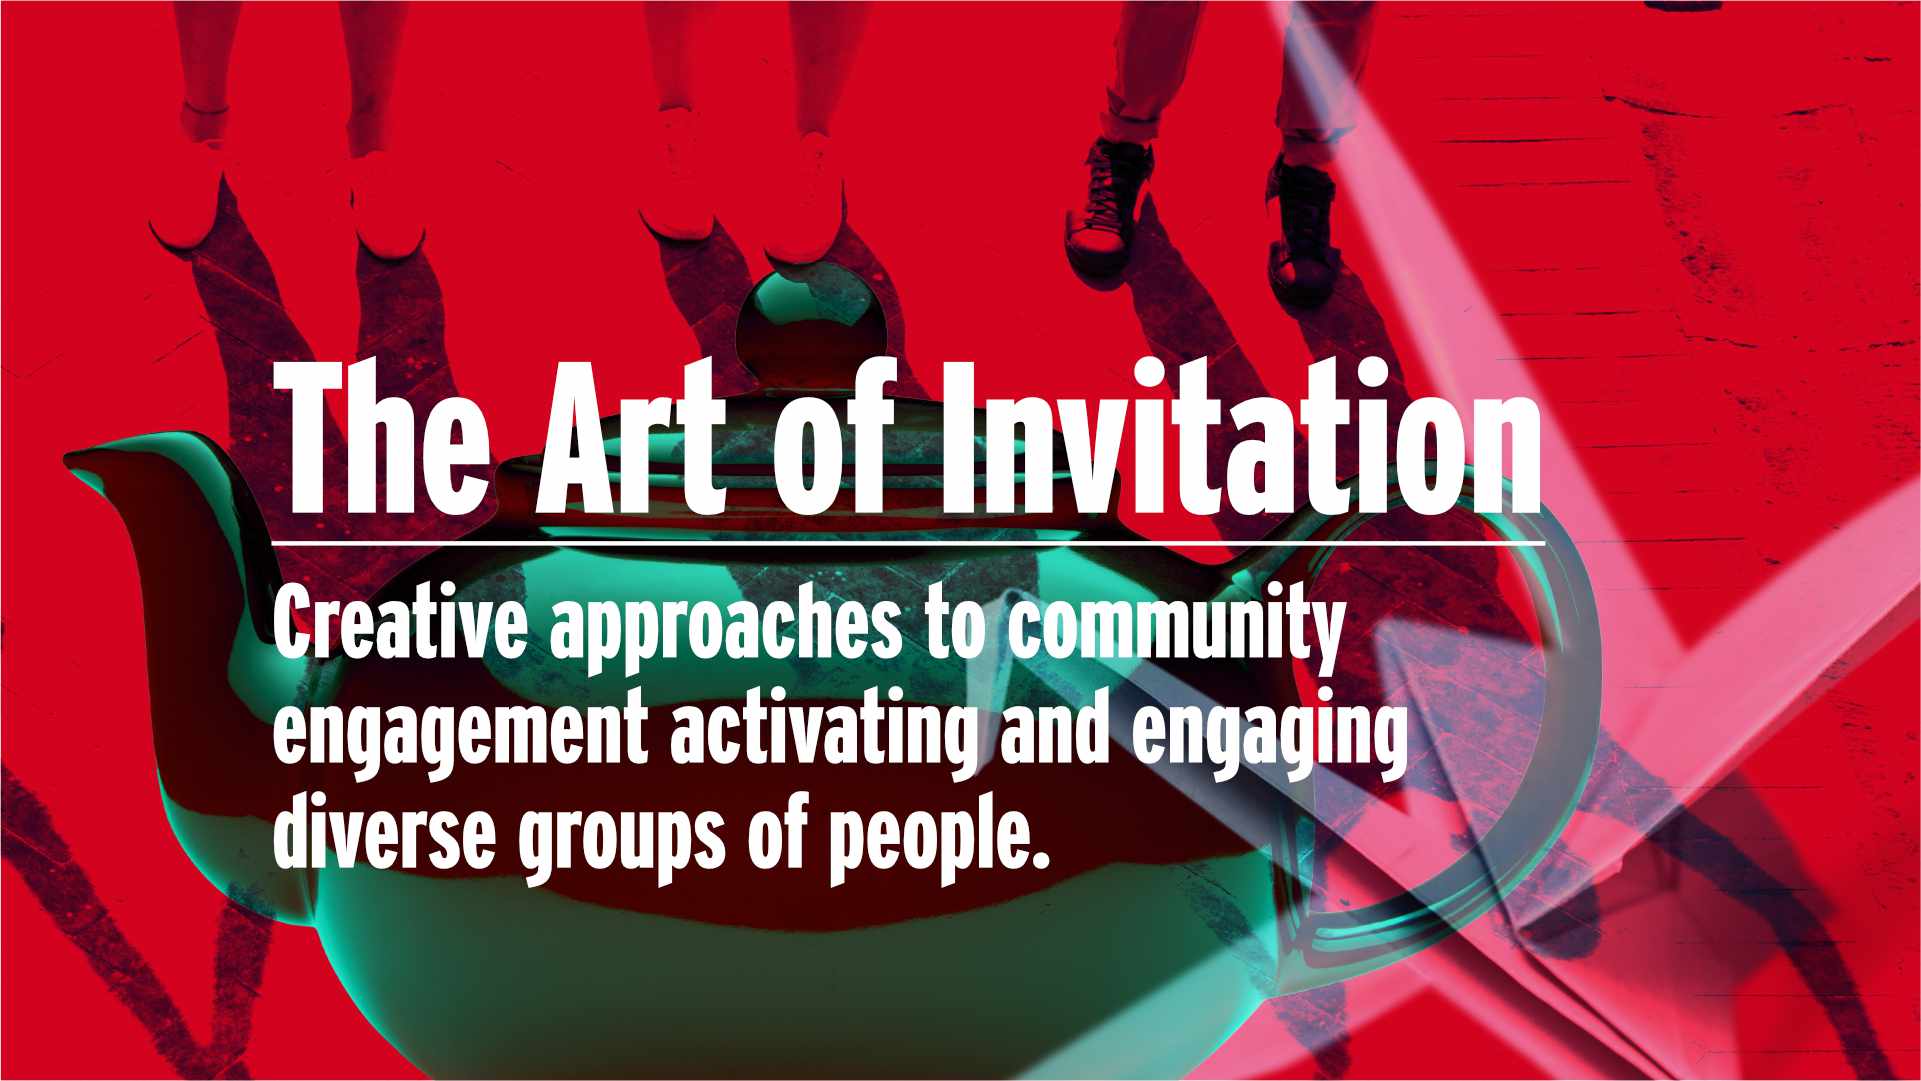 Art of invitation image.